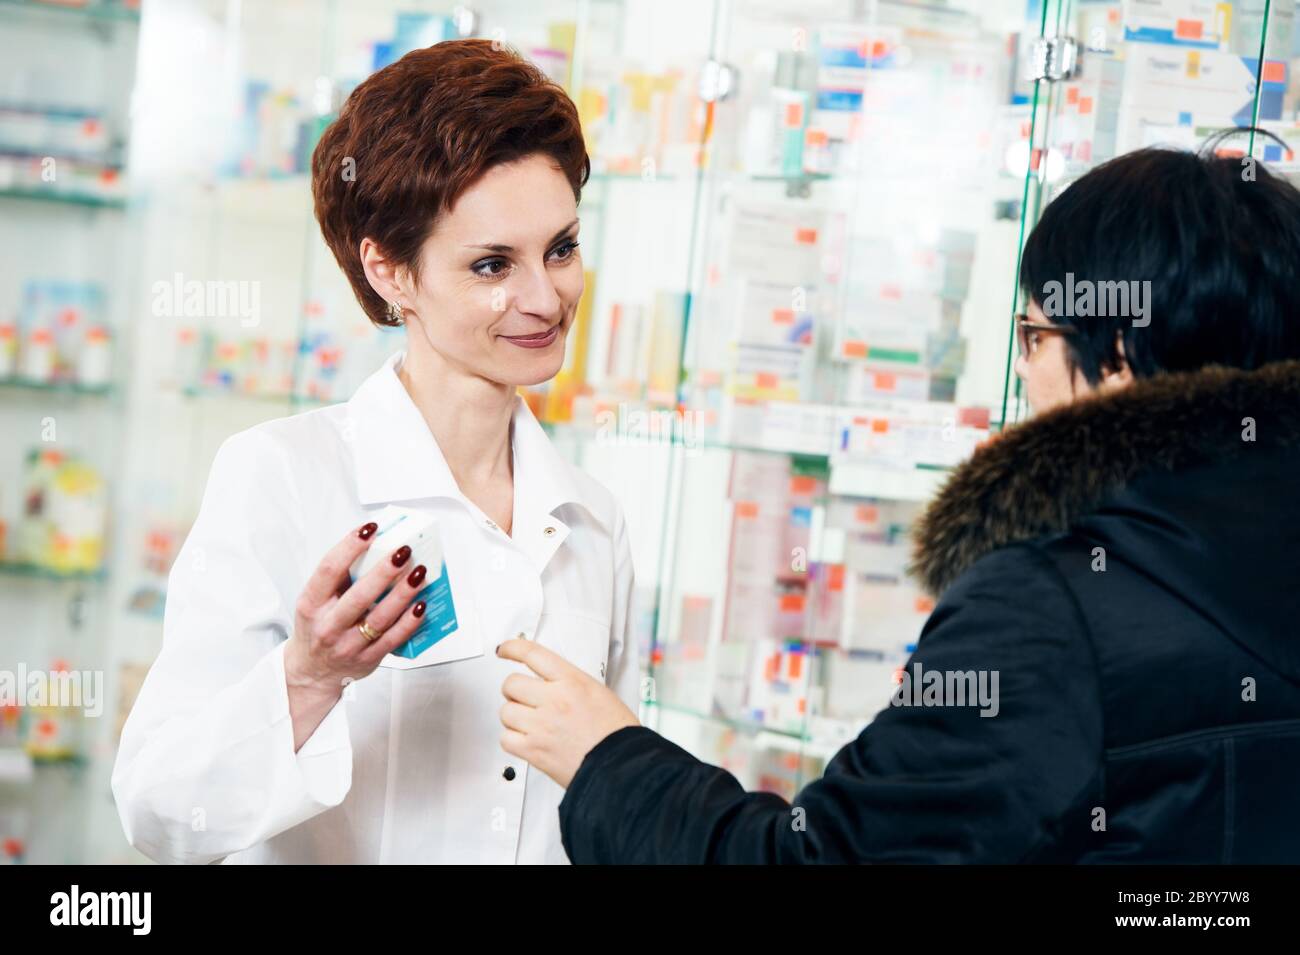 medical drug purchase Stock Photo